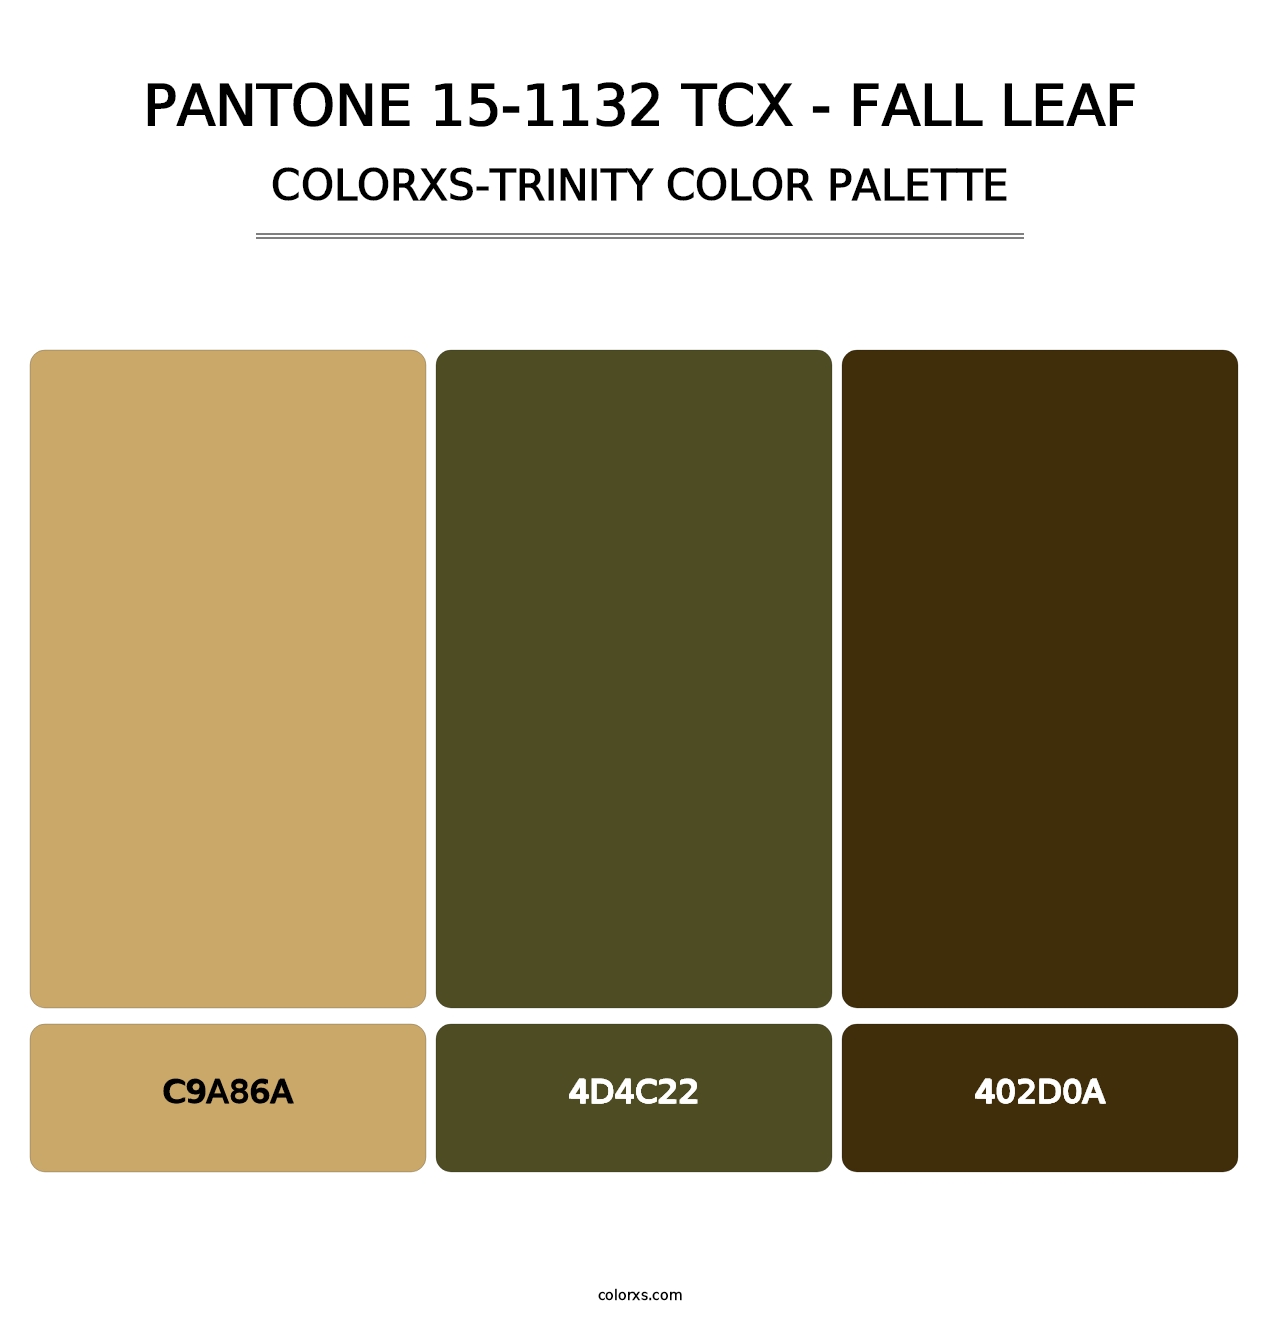 PANTONE 15-1132 TCX - Fall Leaf - Colorxs Trinity Palette